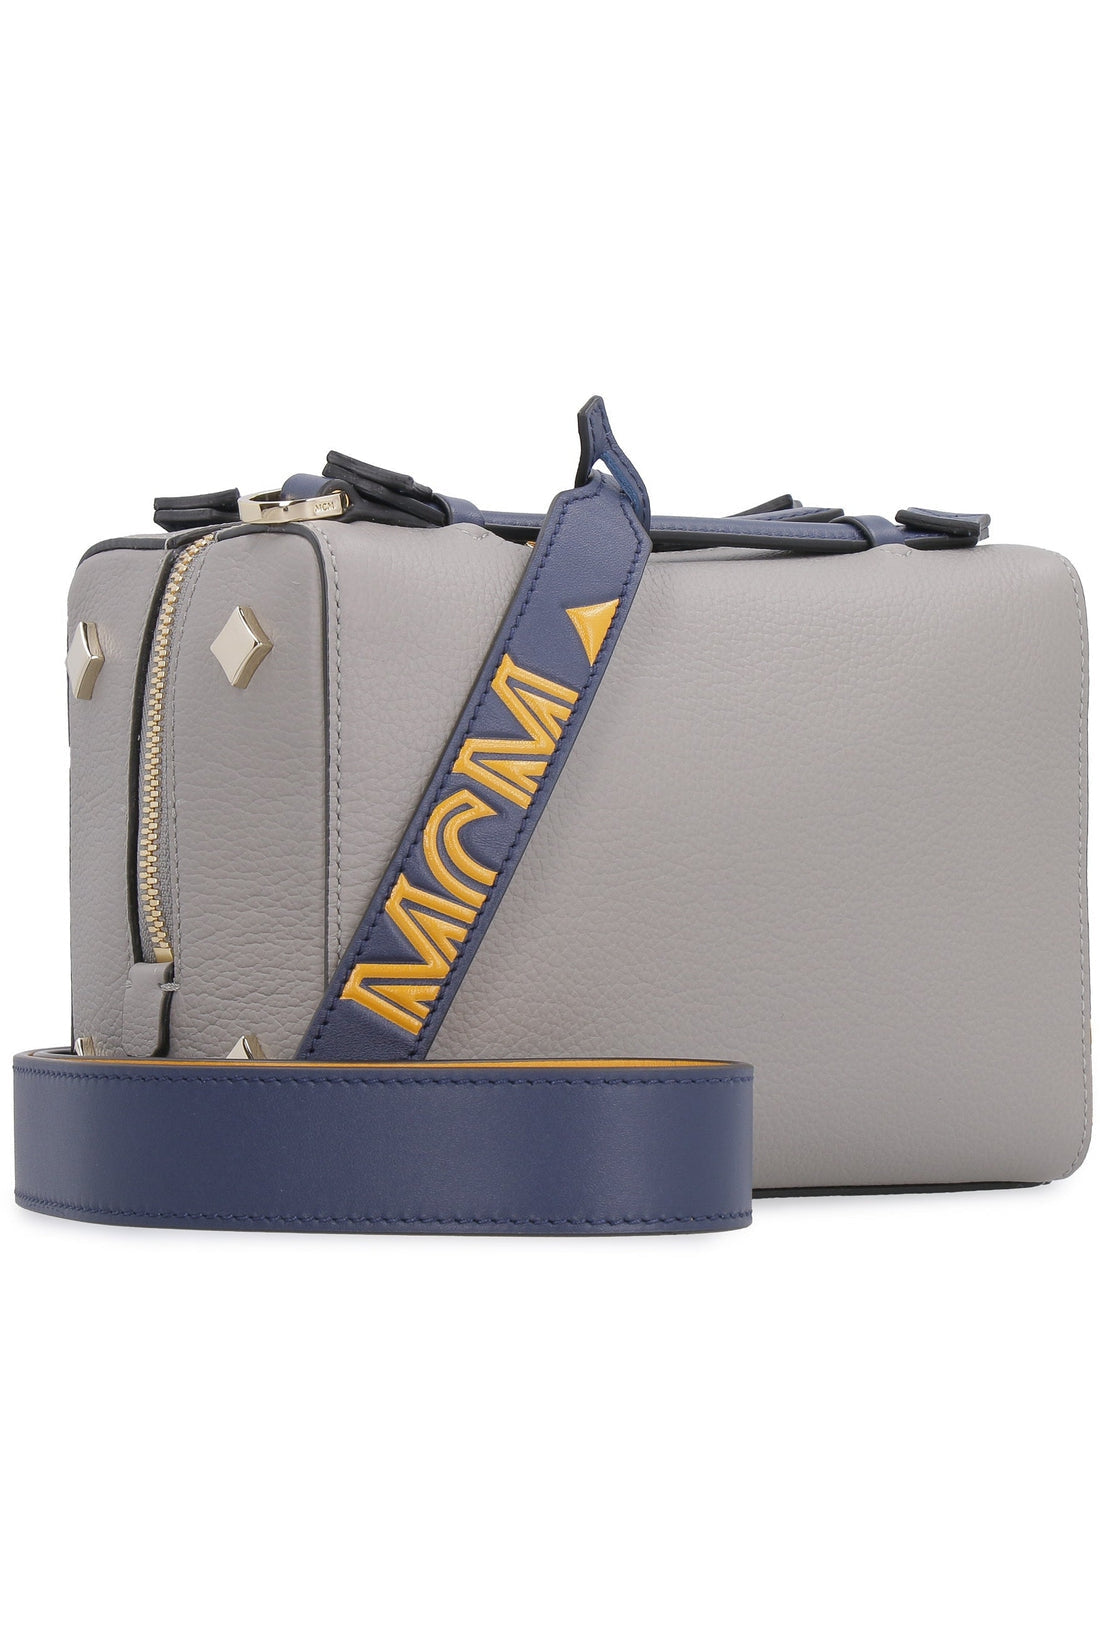 MCM-OUTLET-SALE-Milano leather boston bag-ARCHIVIST